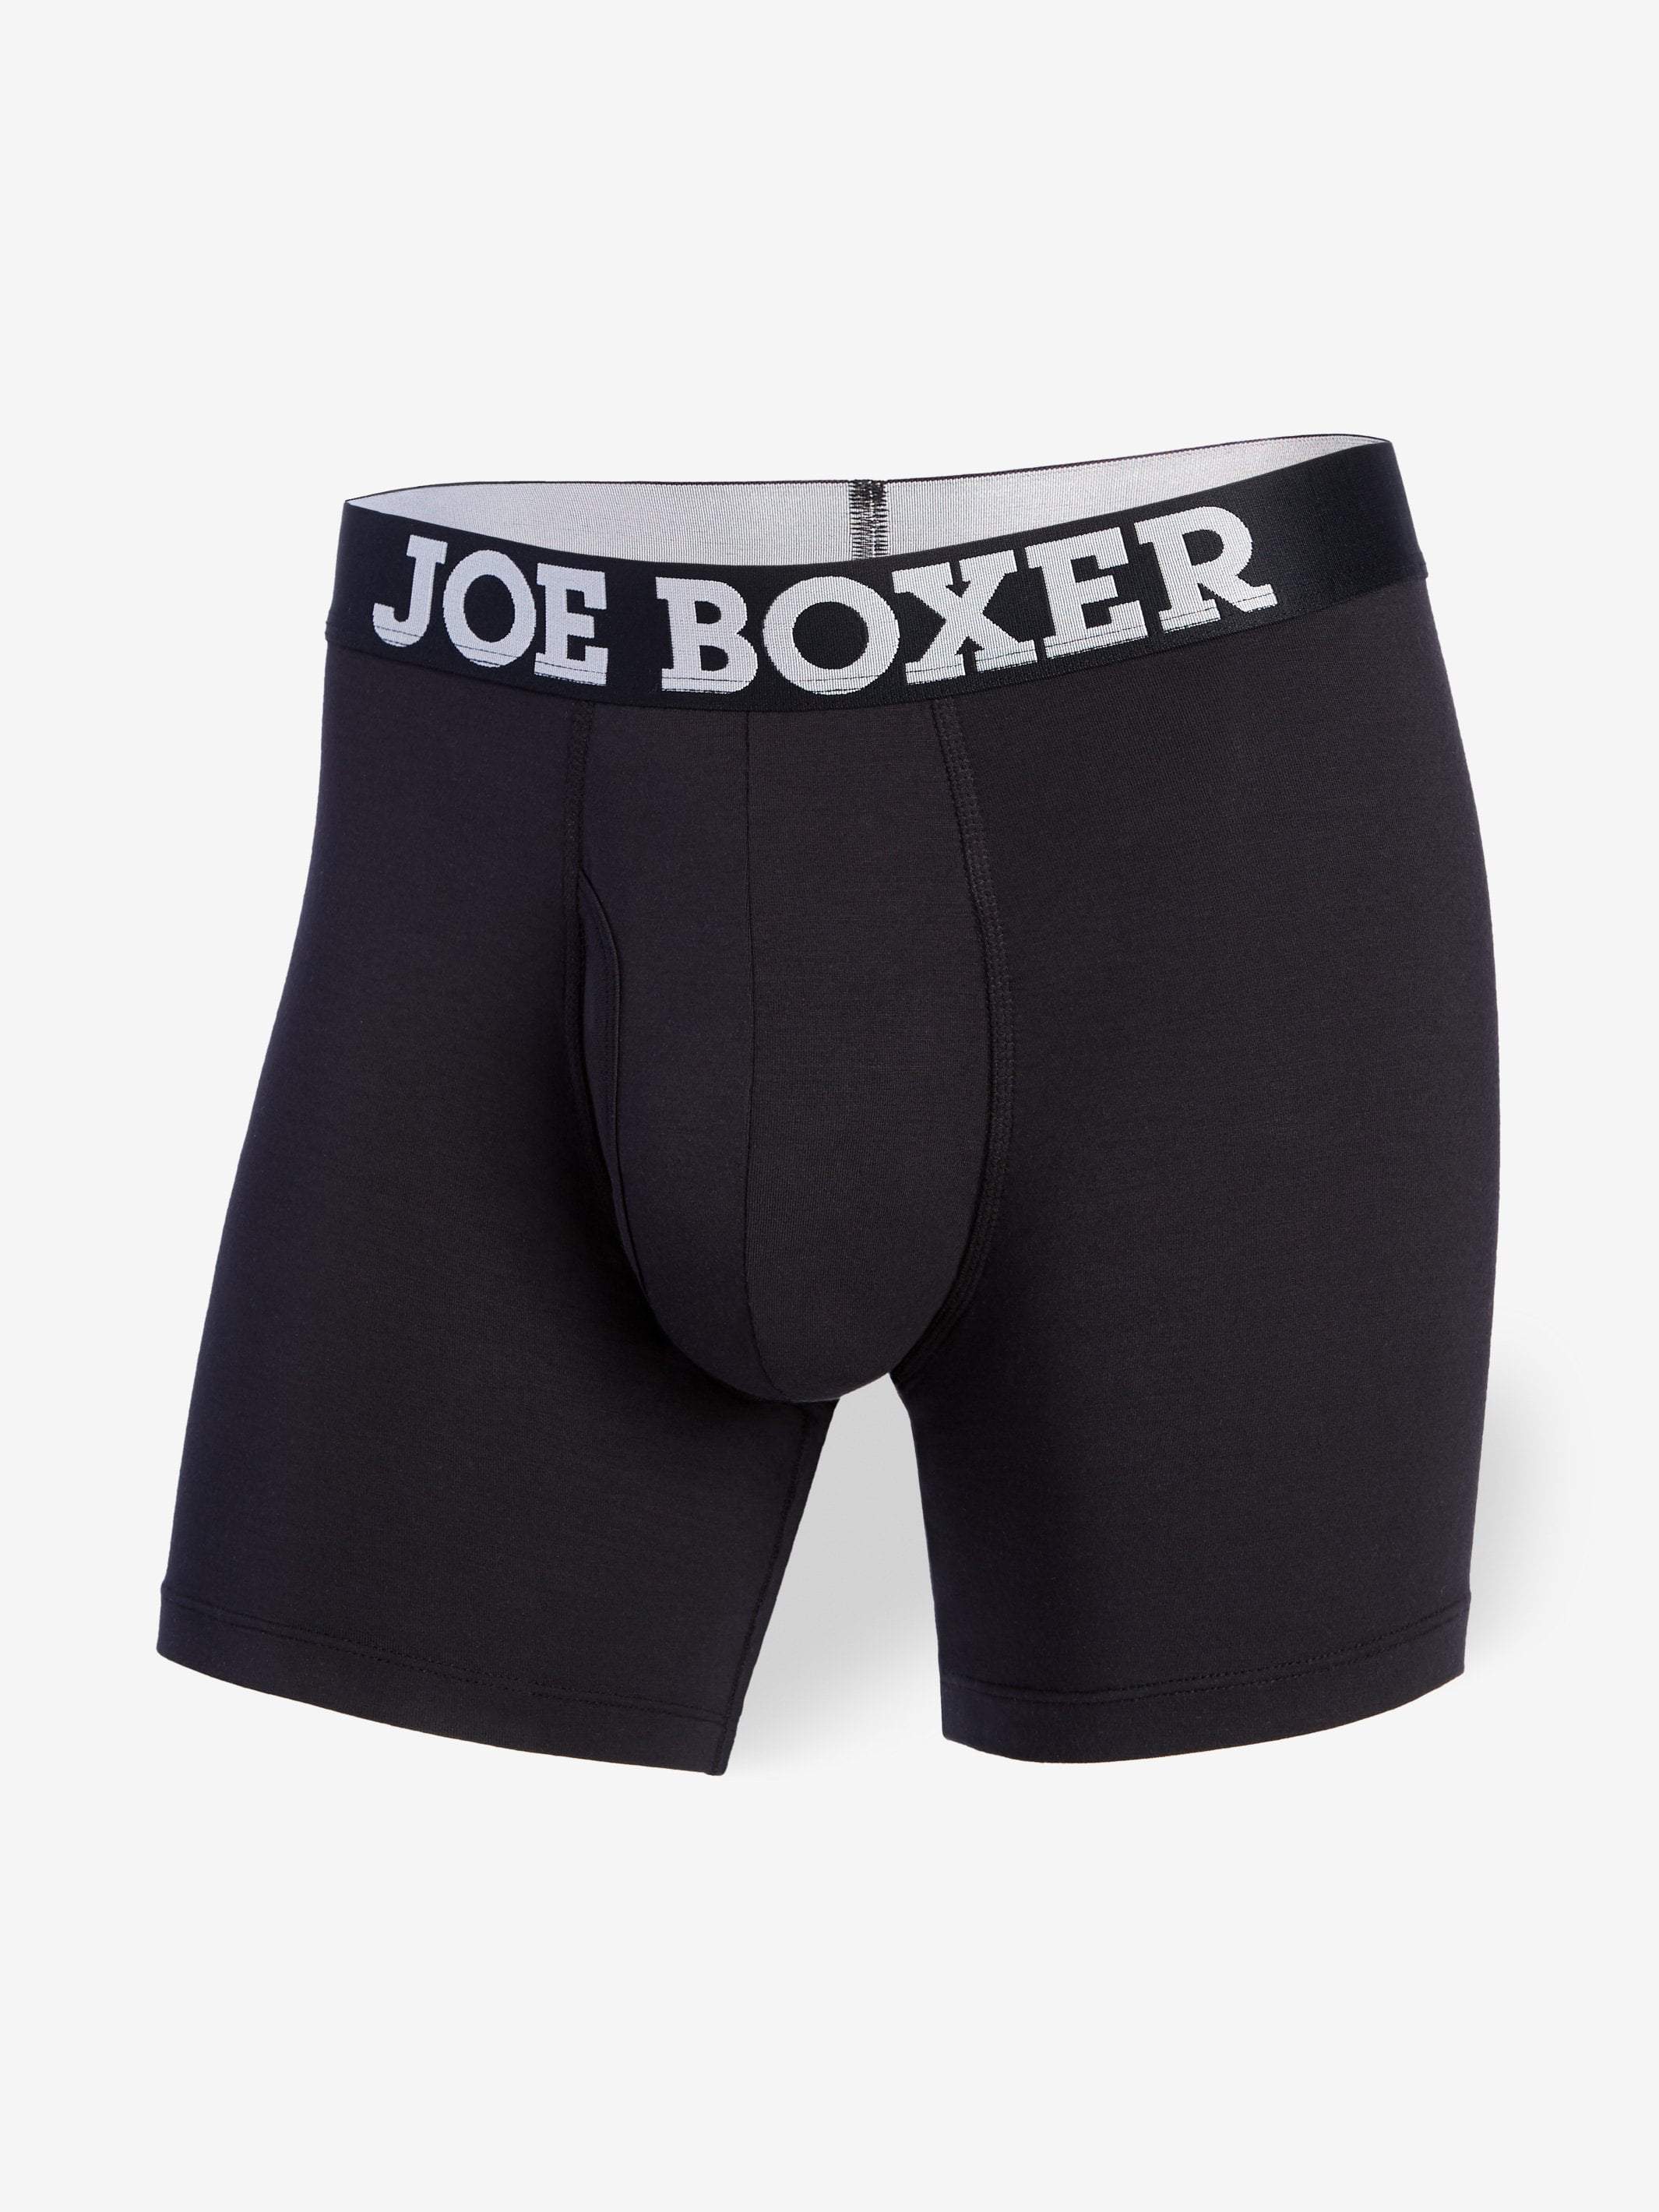 The Future of Men's Underwear? - Pouched Boxer Briefs (2021)